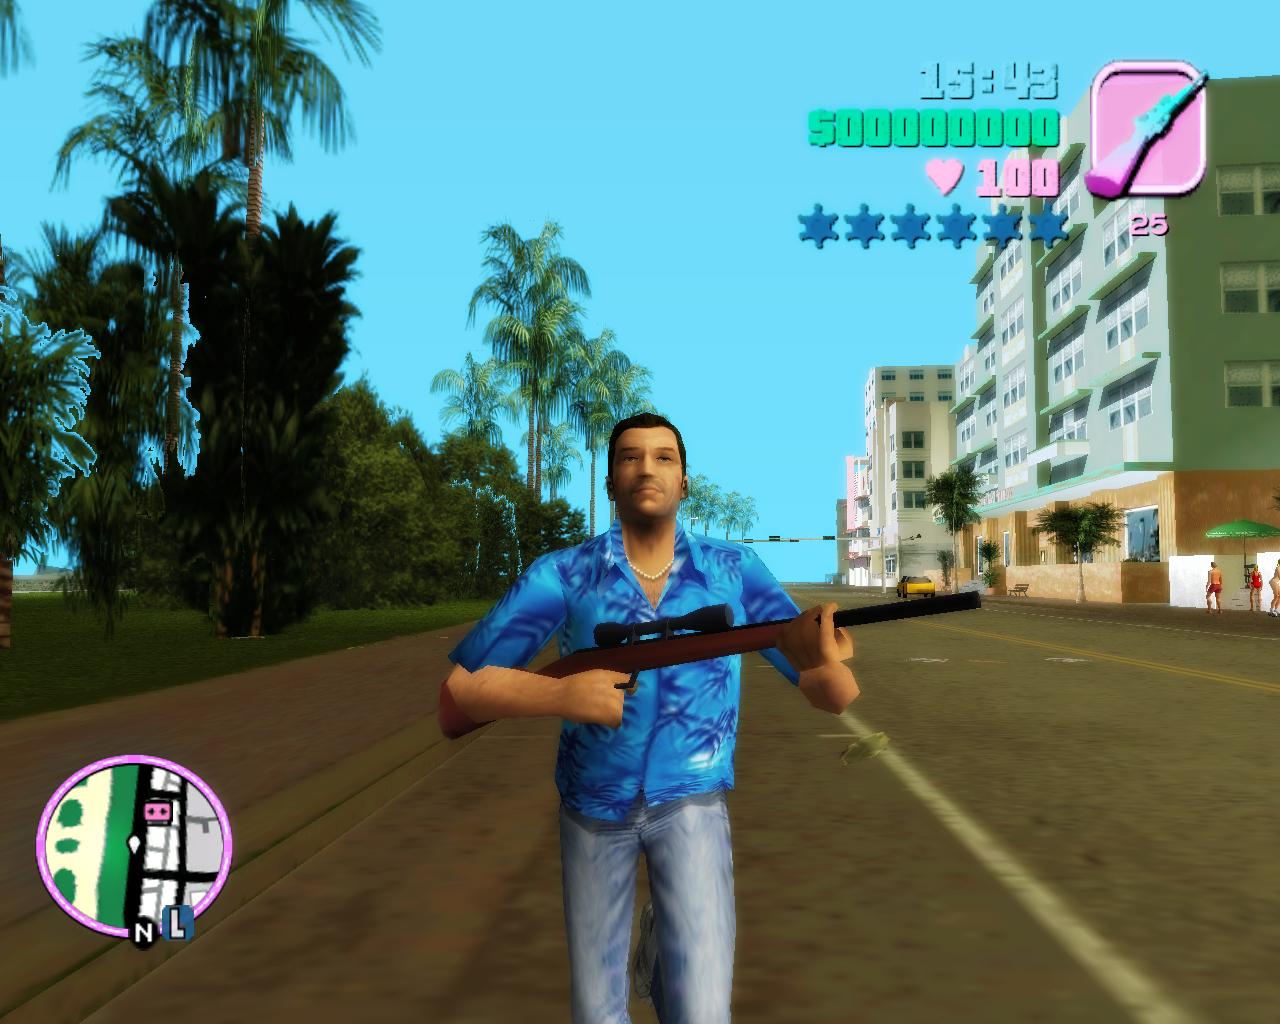 Tommy Vercetti Skin For GTA 3 addon - Grand Theft Auto III - ModDB